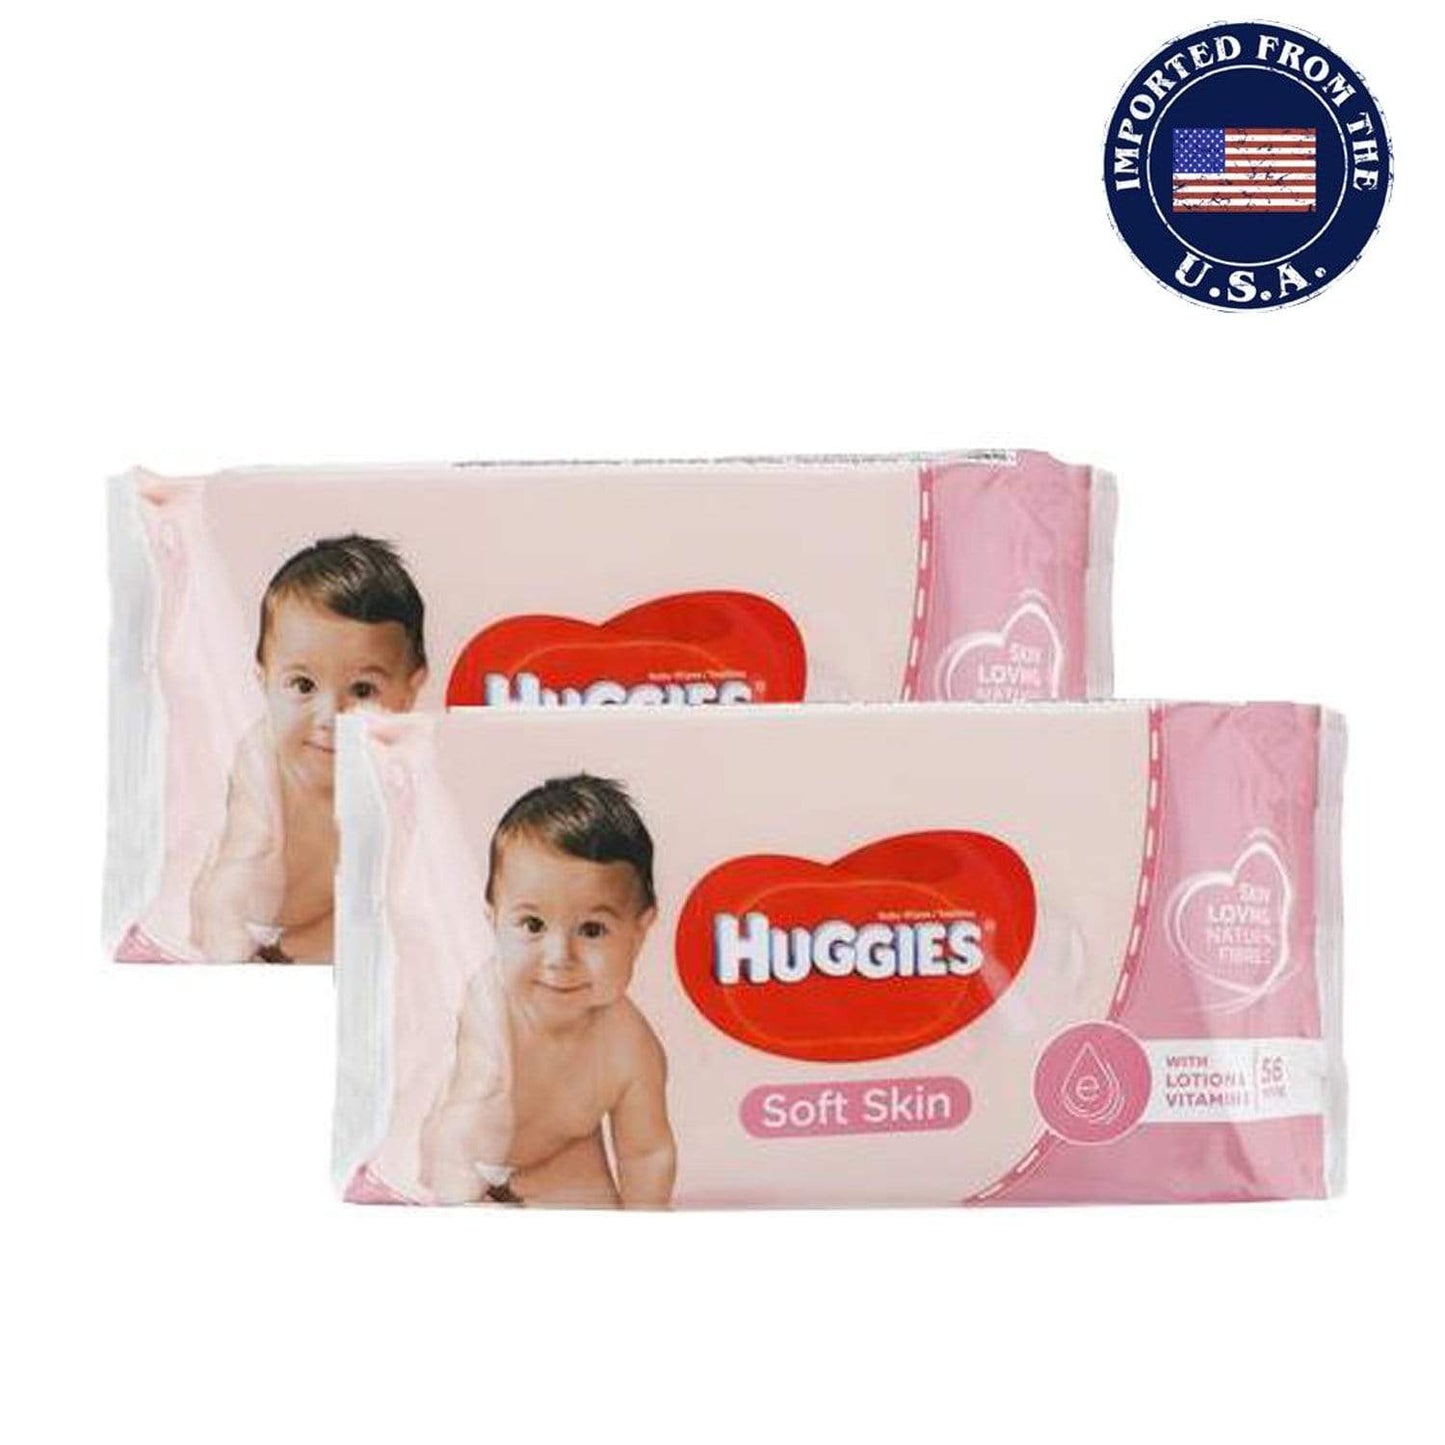 HUGGIES Personal Care HUGGIES - Pure Soft Skin Baby Wipes - 2 Packs